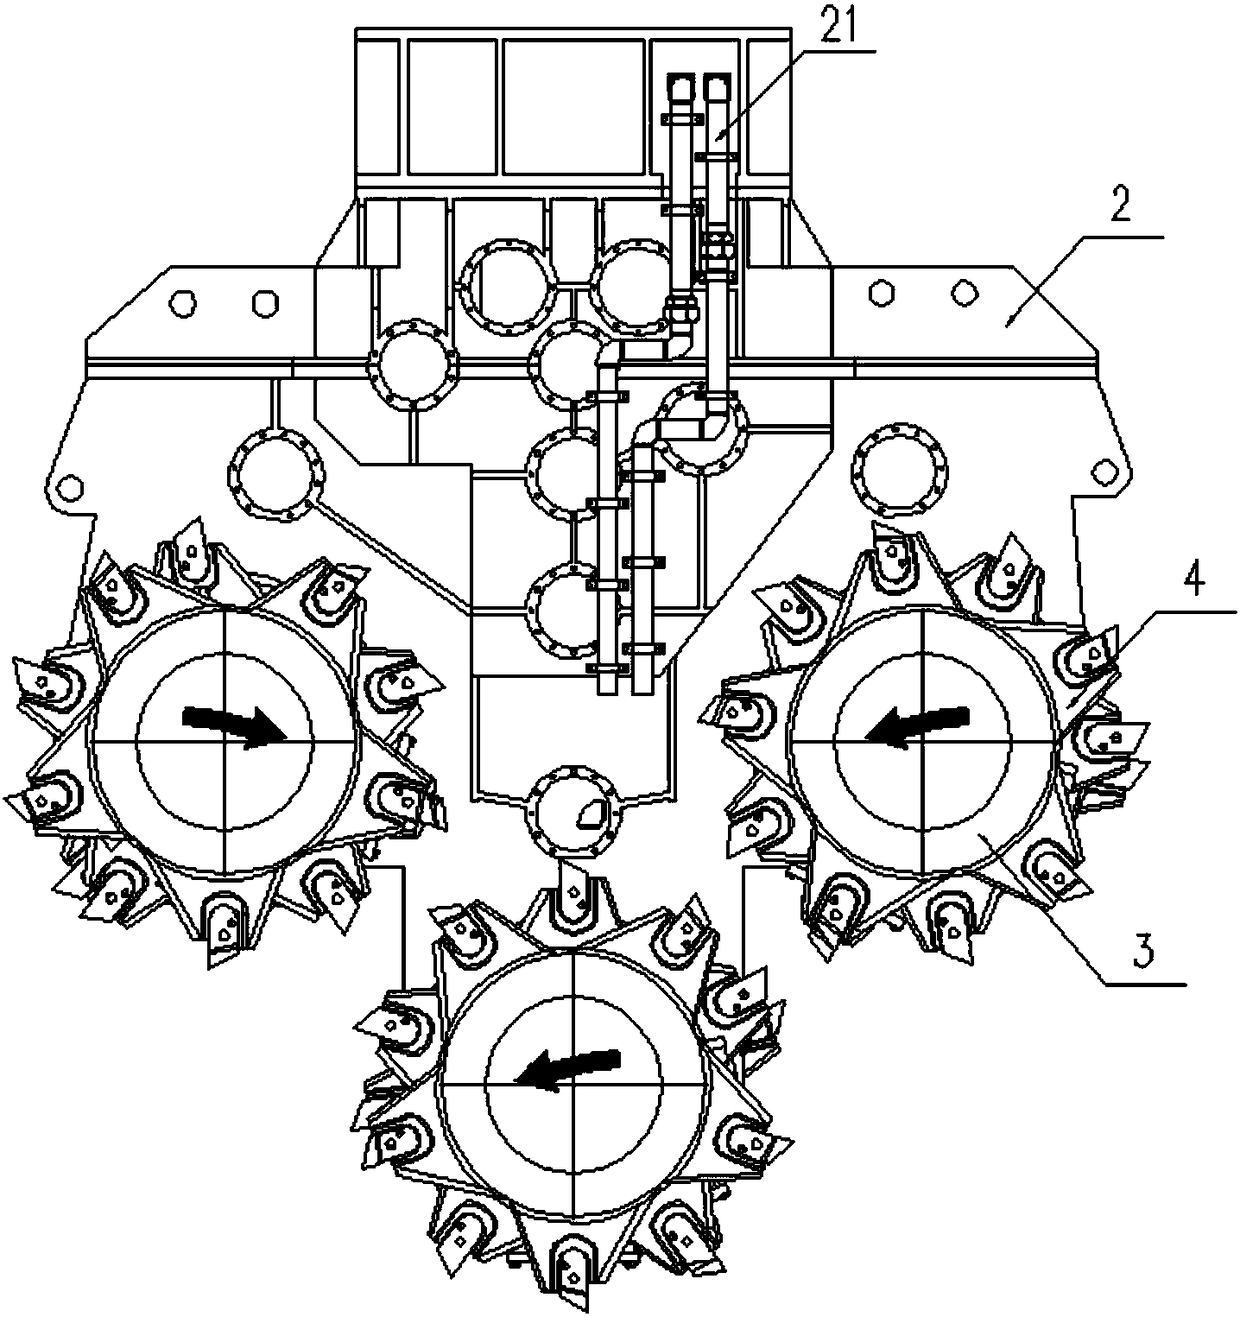 Transmission system of hydraulic three-wheel slot milling machine